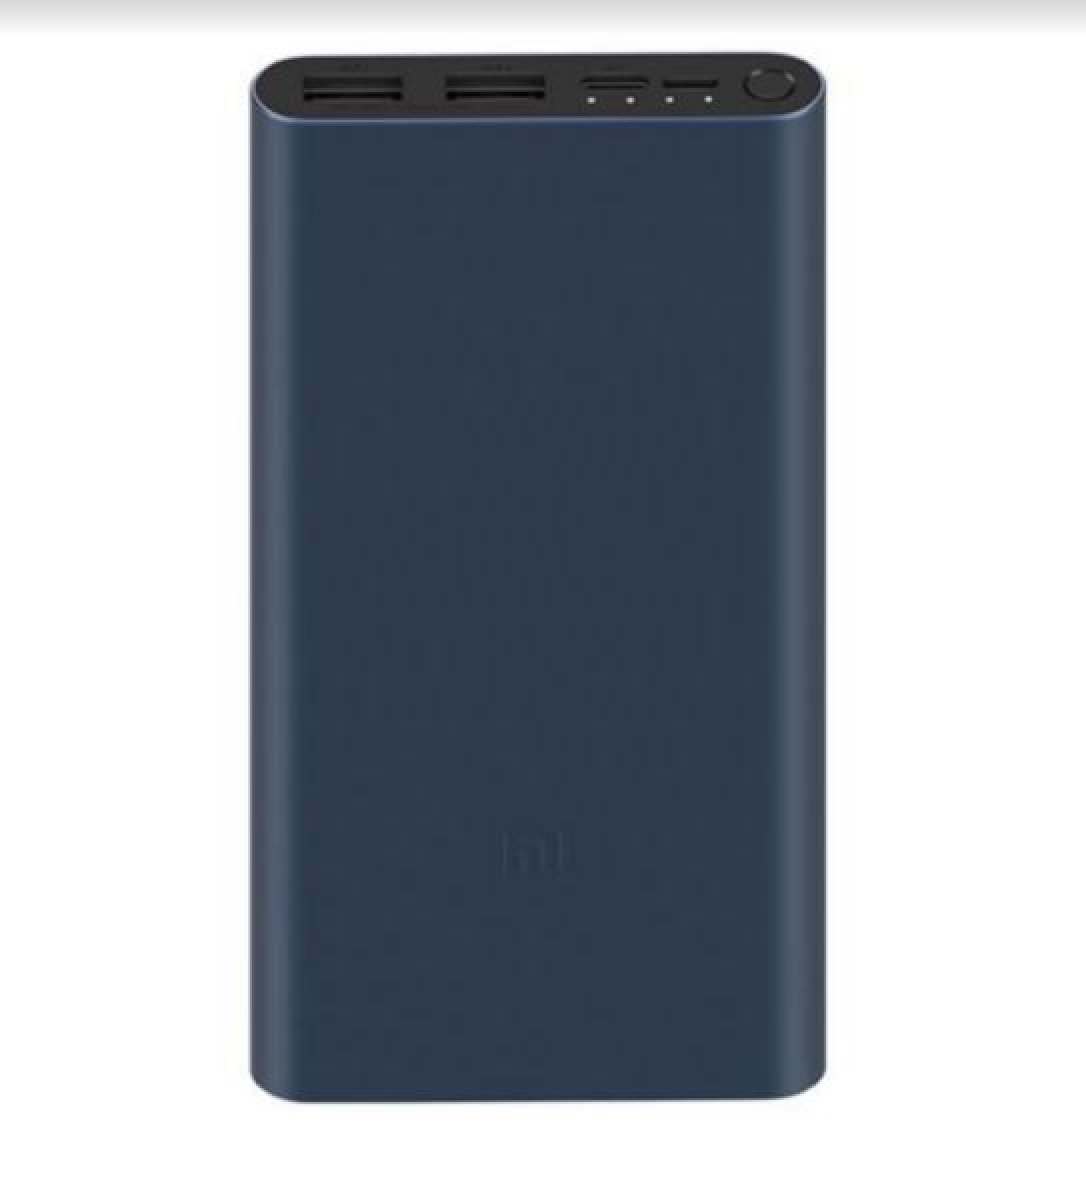 Power Bank Xiaomi MI 10000 mAh 18W Fast Charge Black 